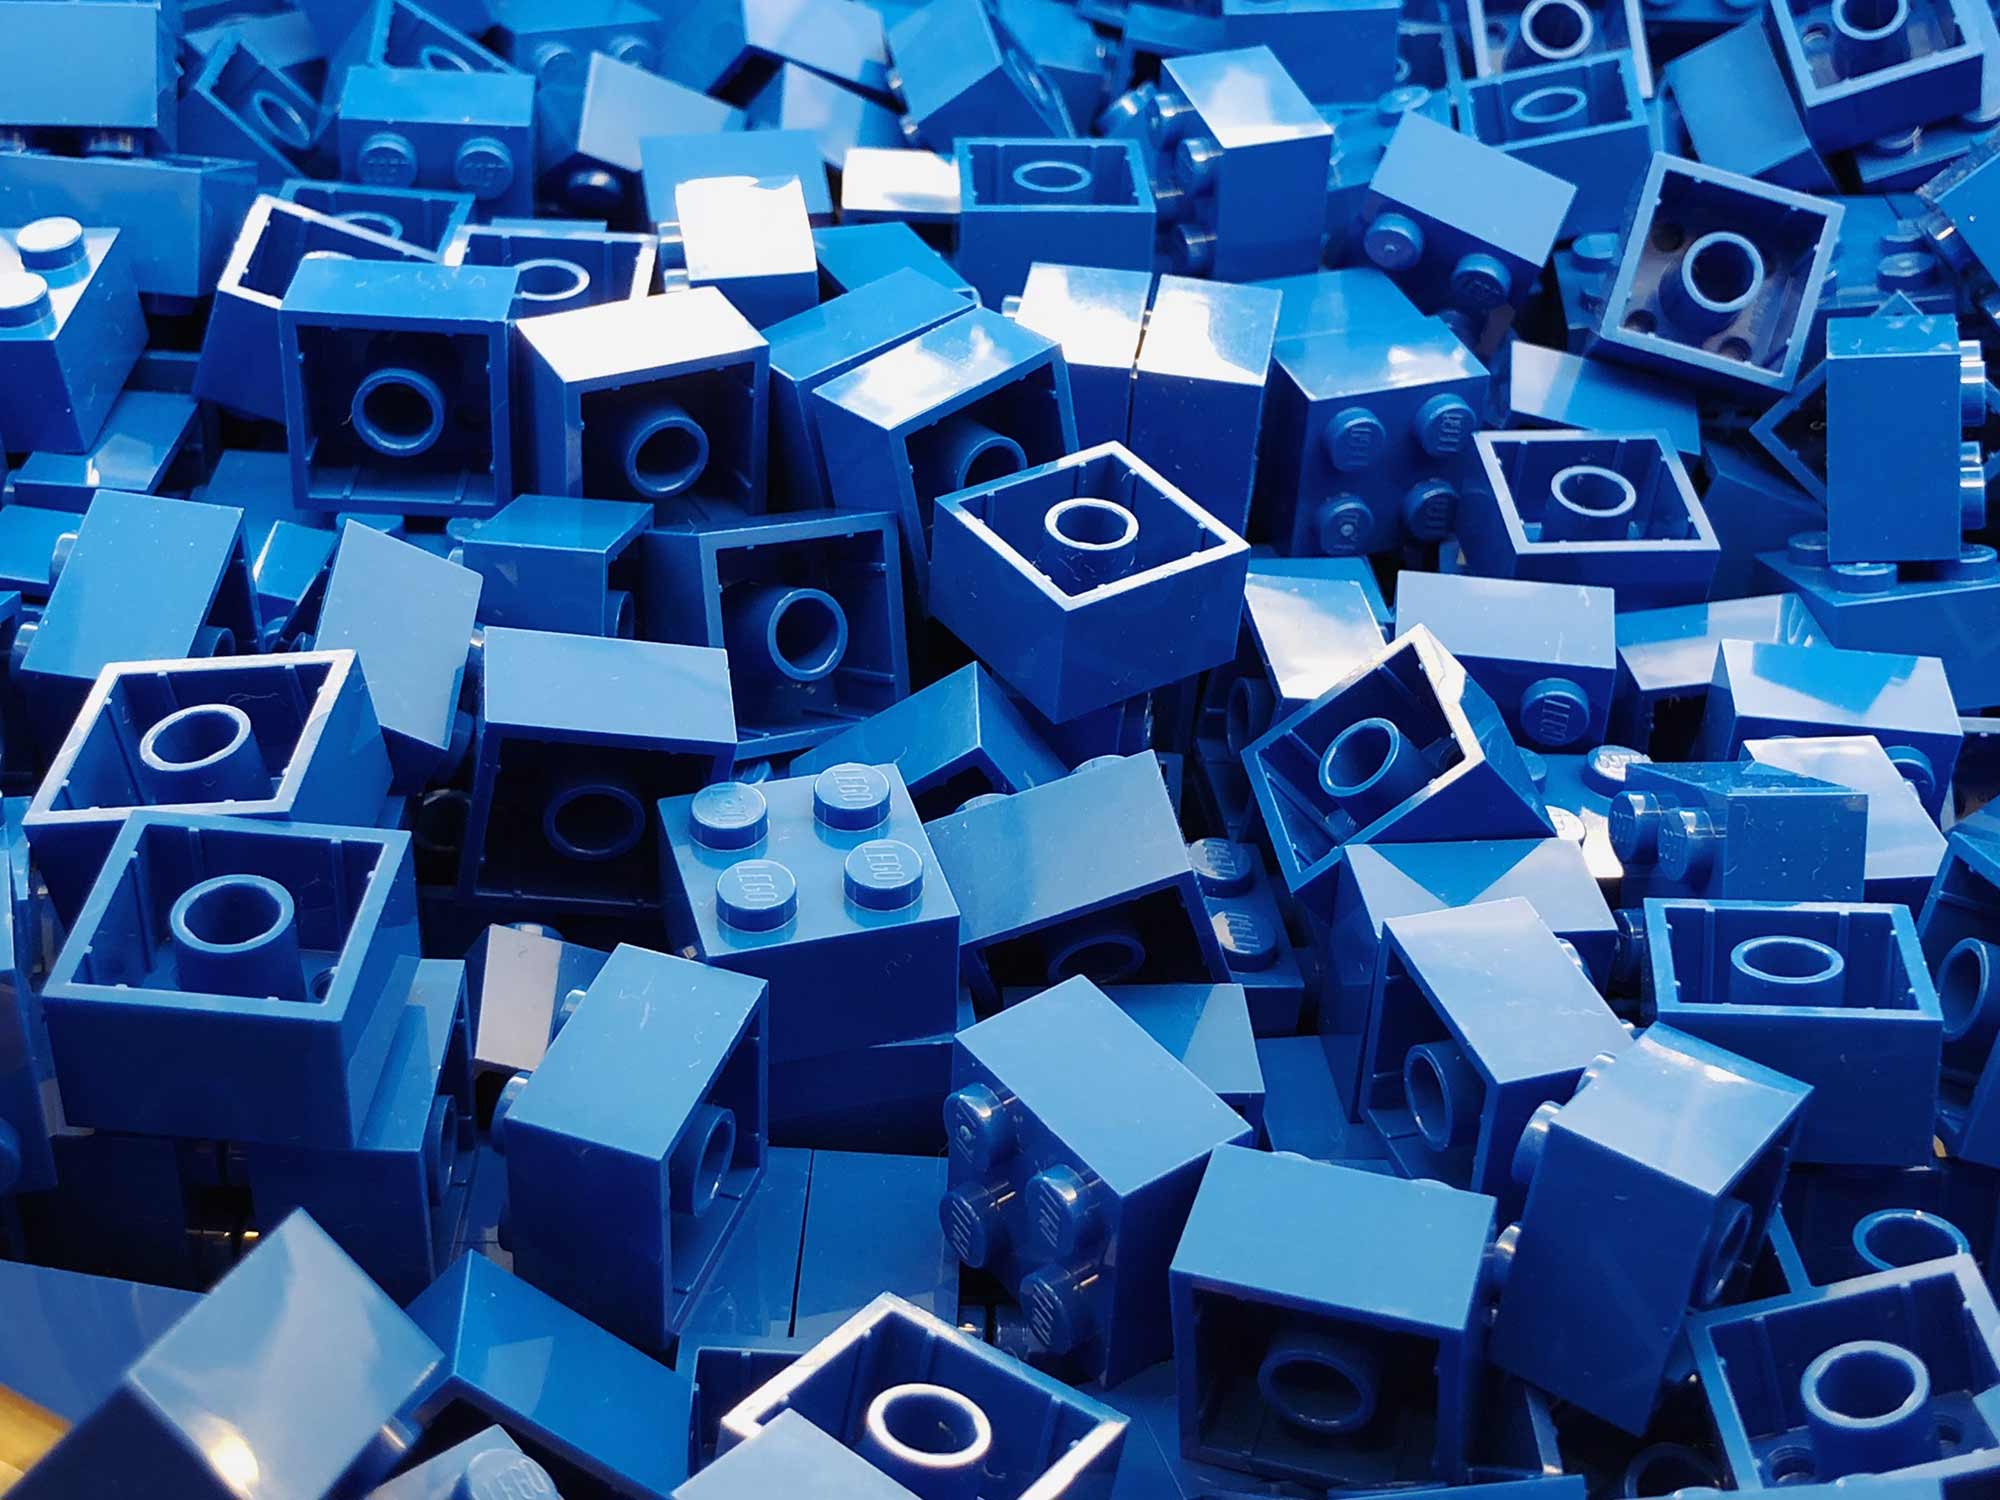 Random pile of blue Legos